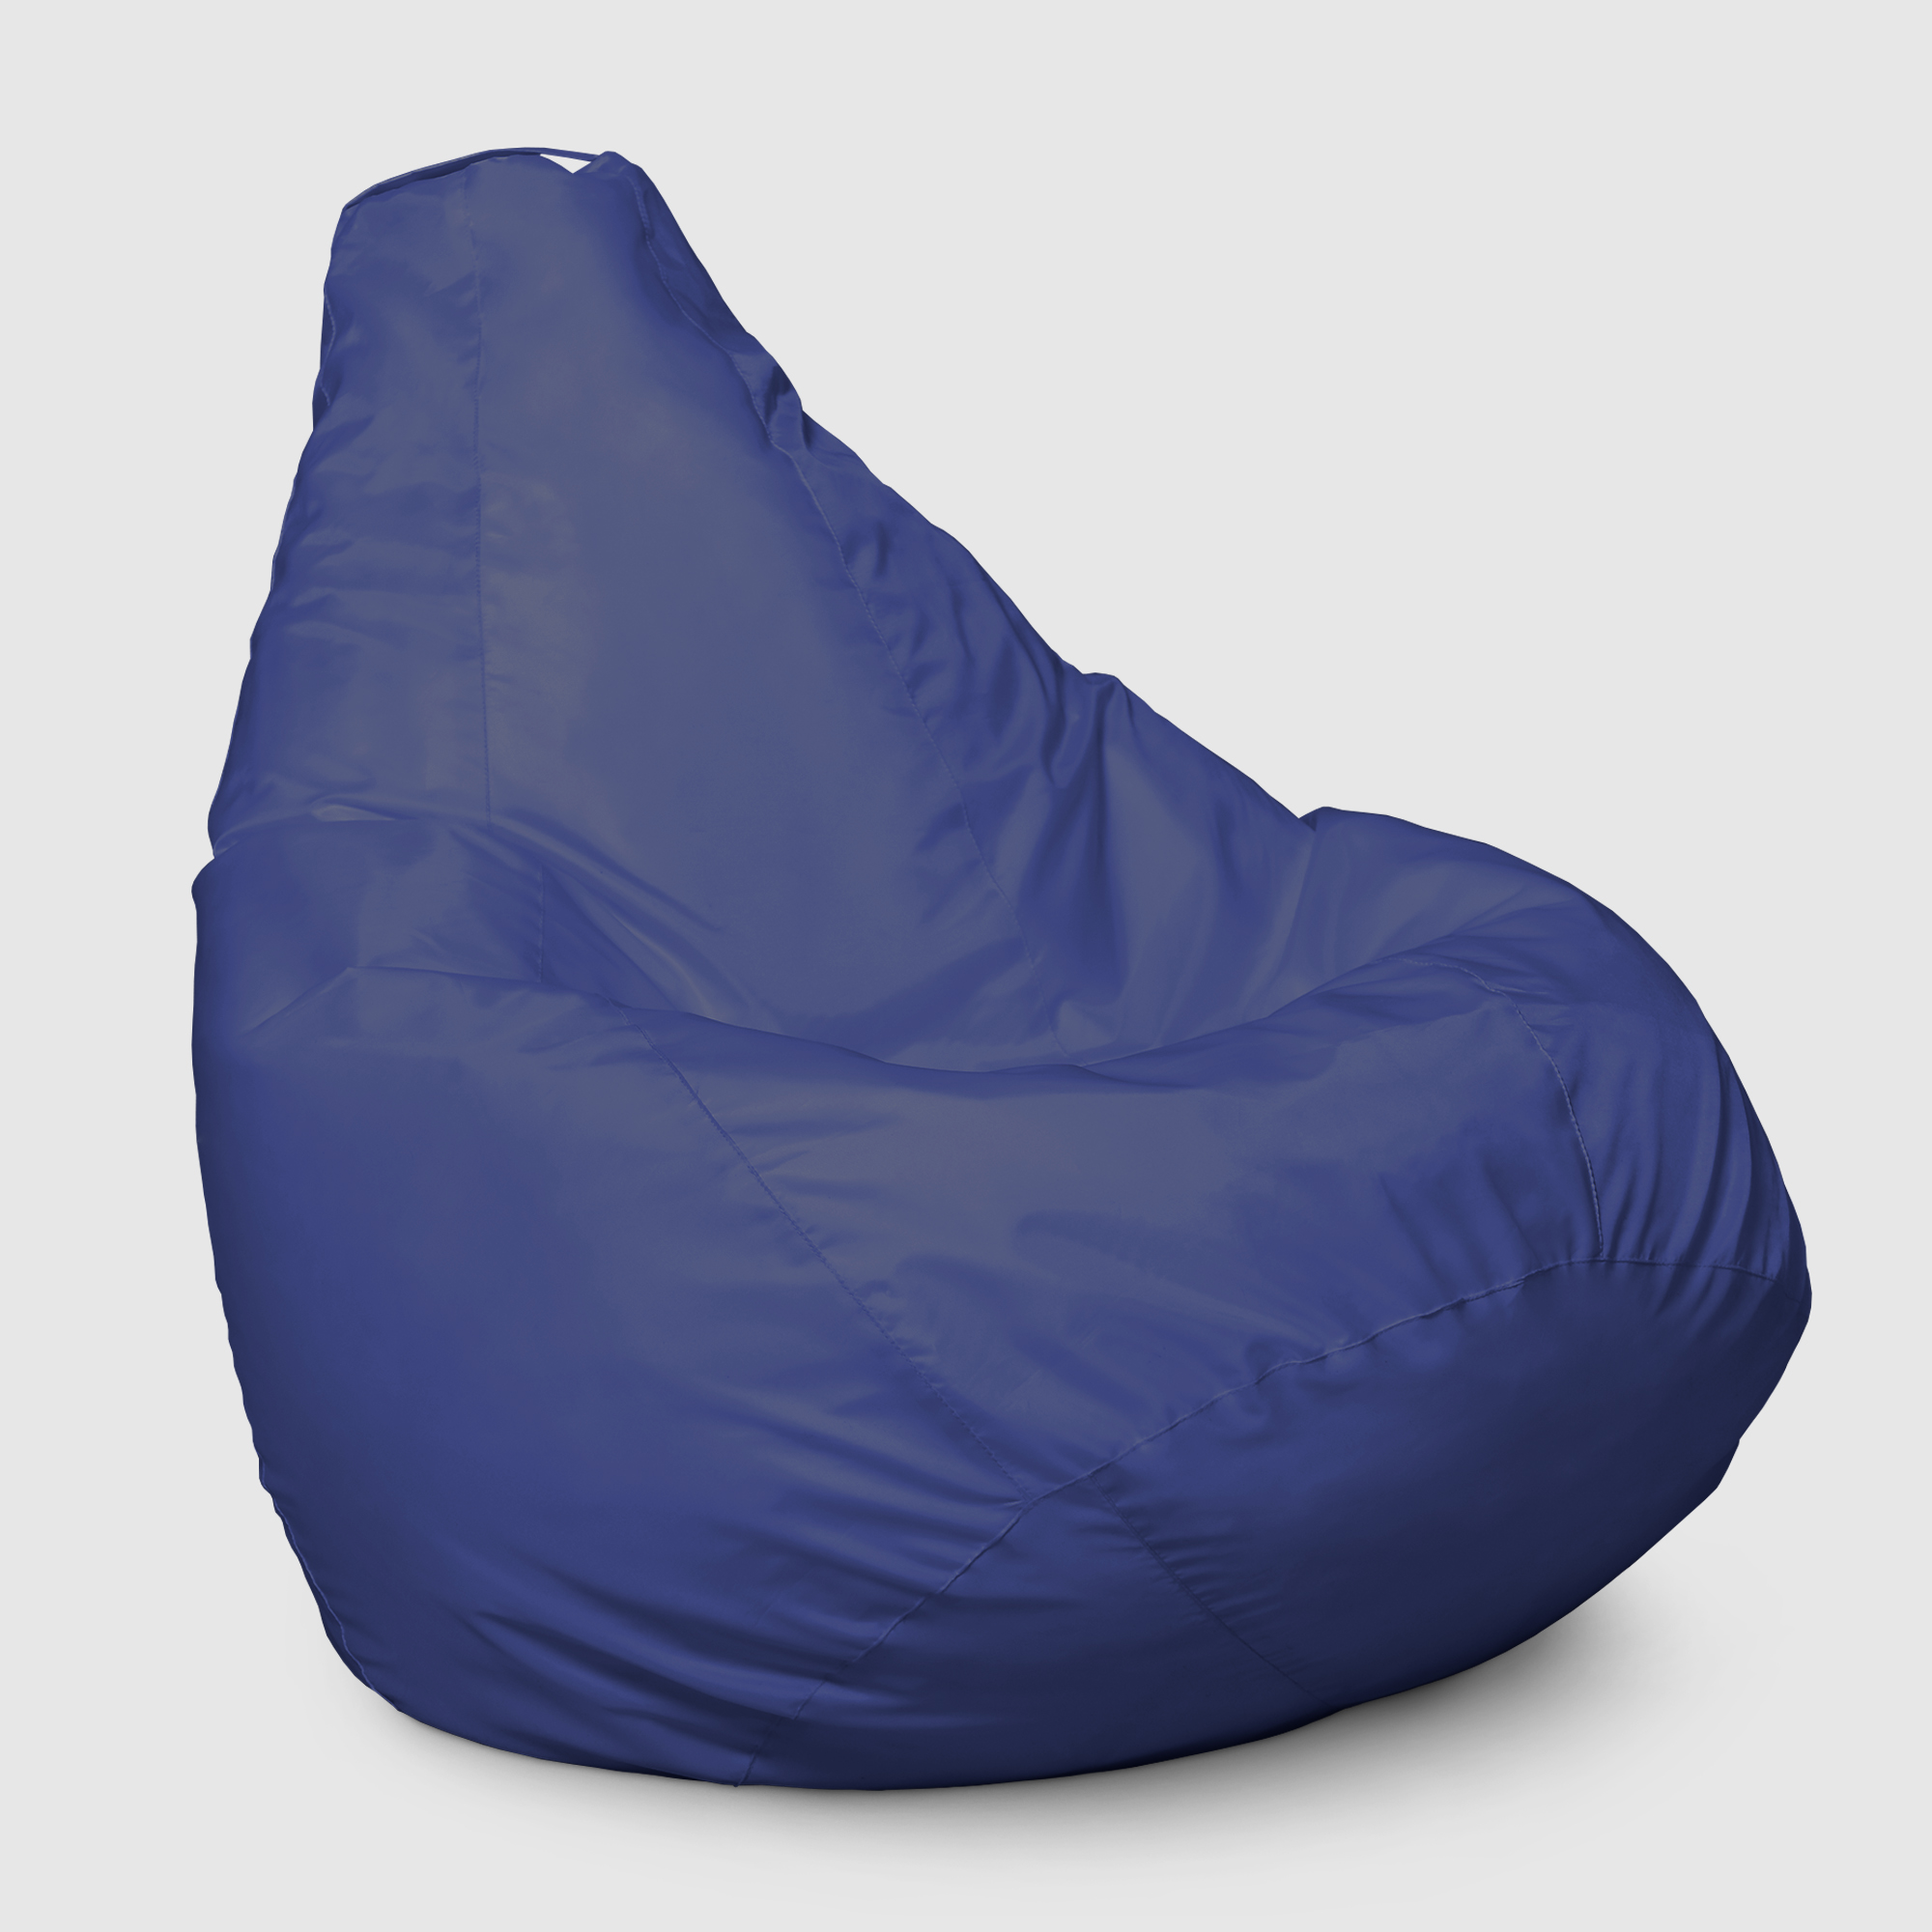 Кресло мешок Dreambag Меган xl темно-синее 85х85х125 см кресло мешок dreambag меган xl зеленое 85х85х125см